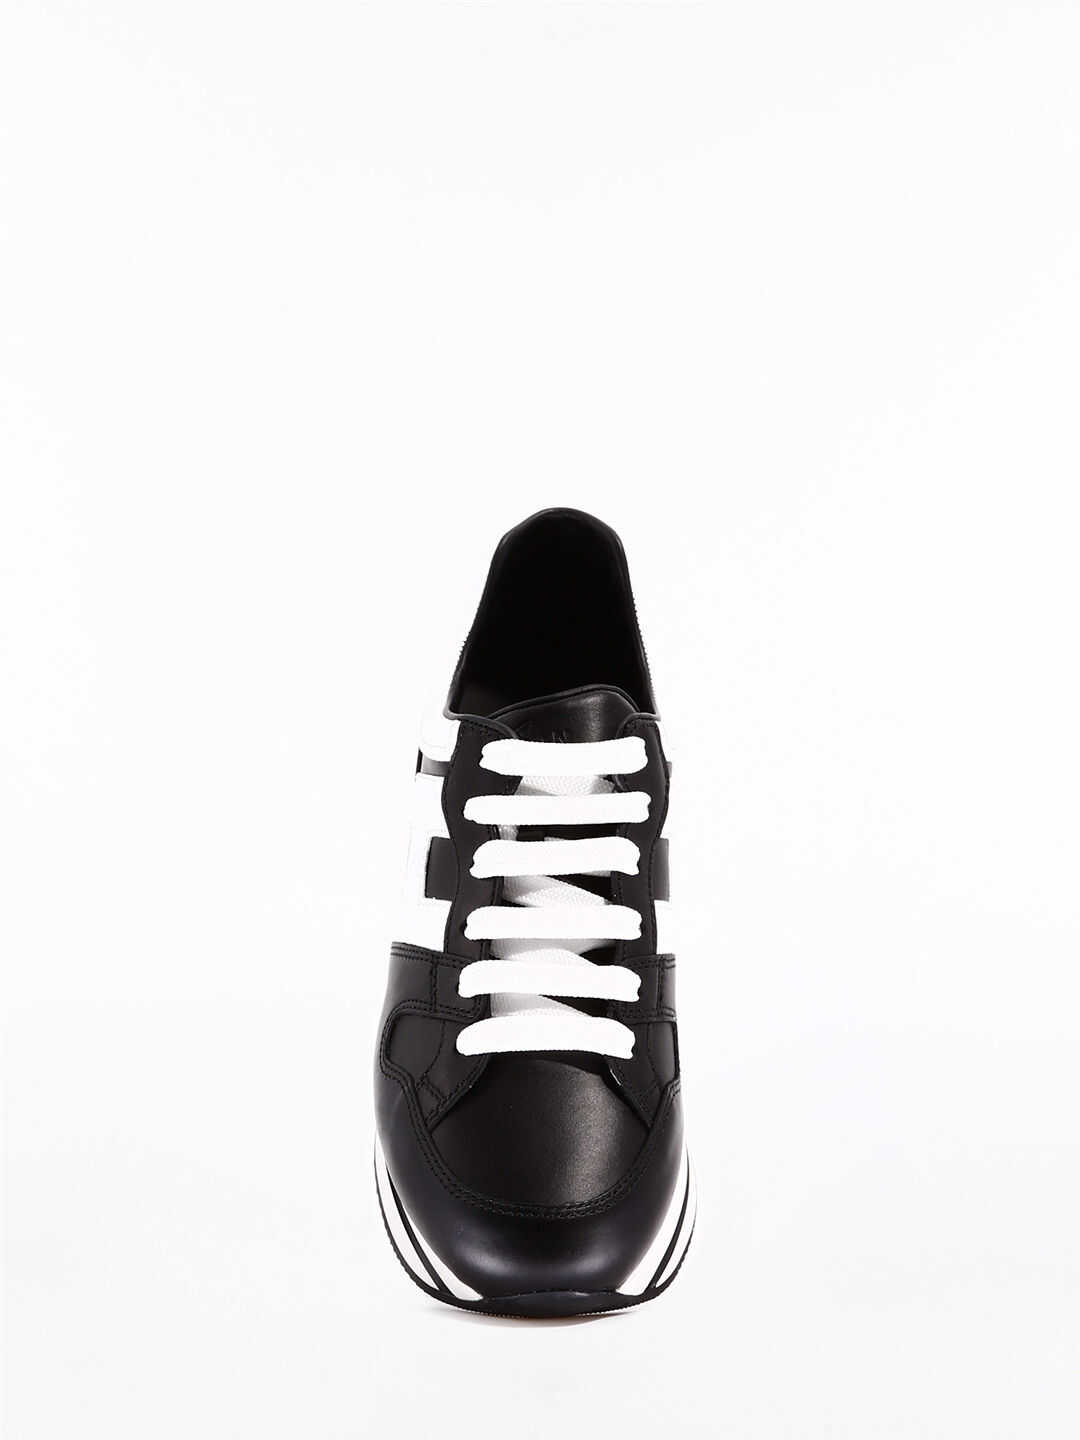 Hogan Shoes Black/white